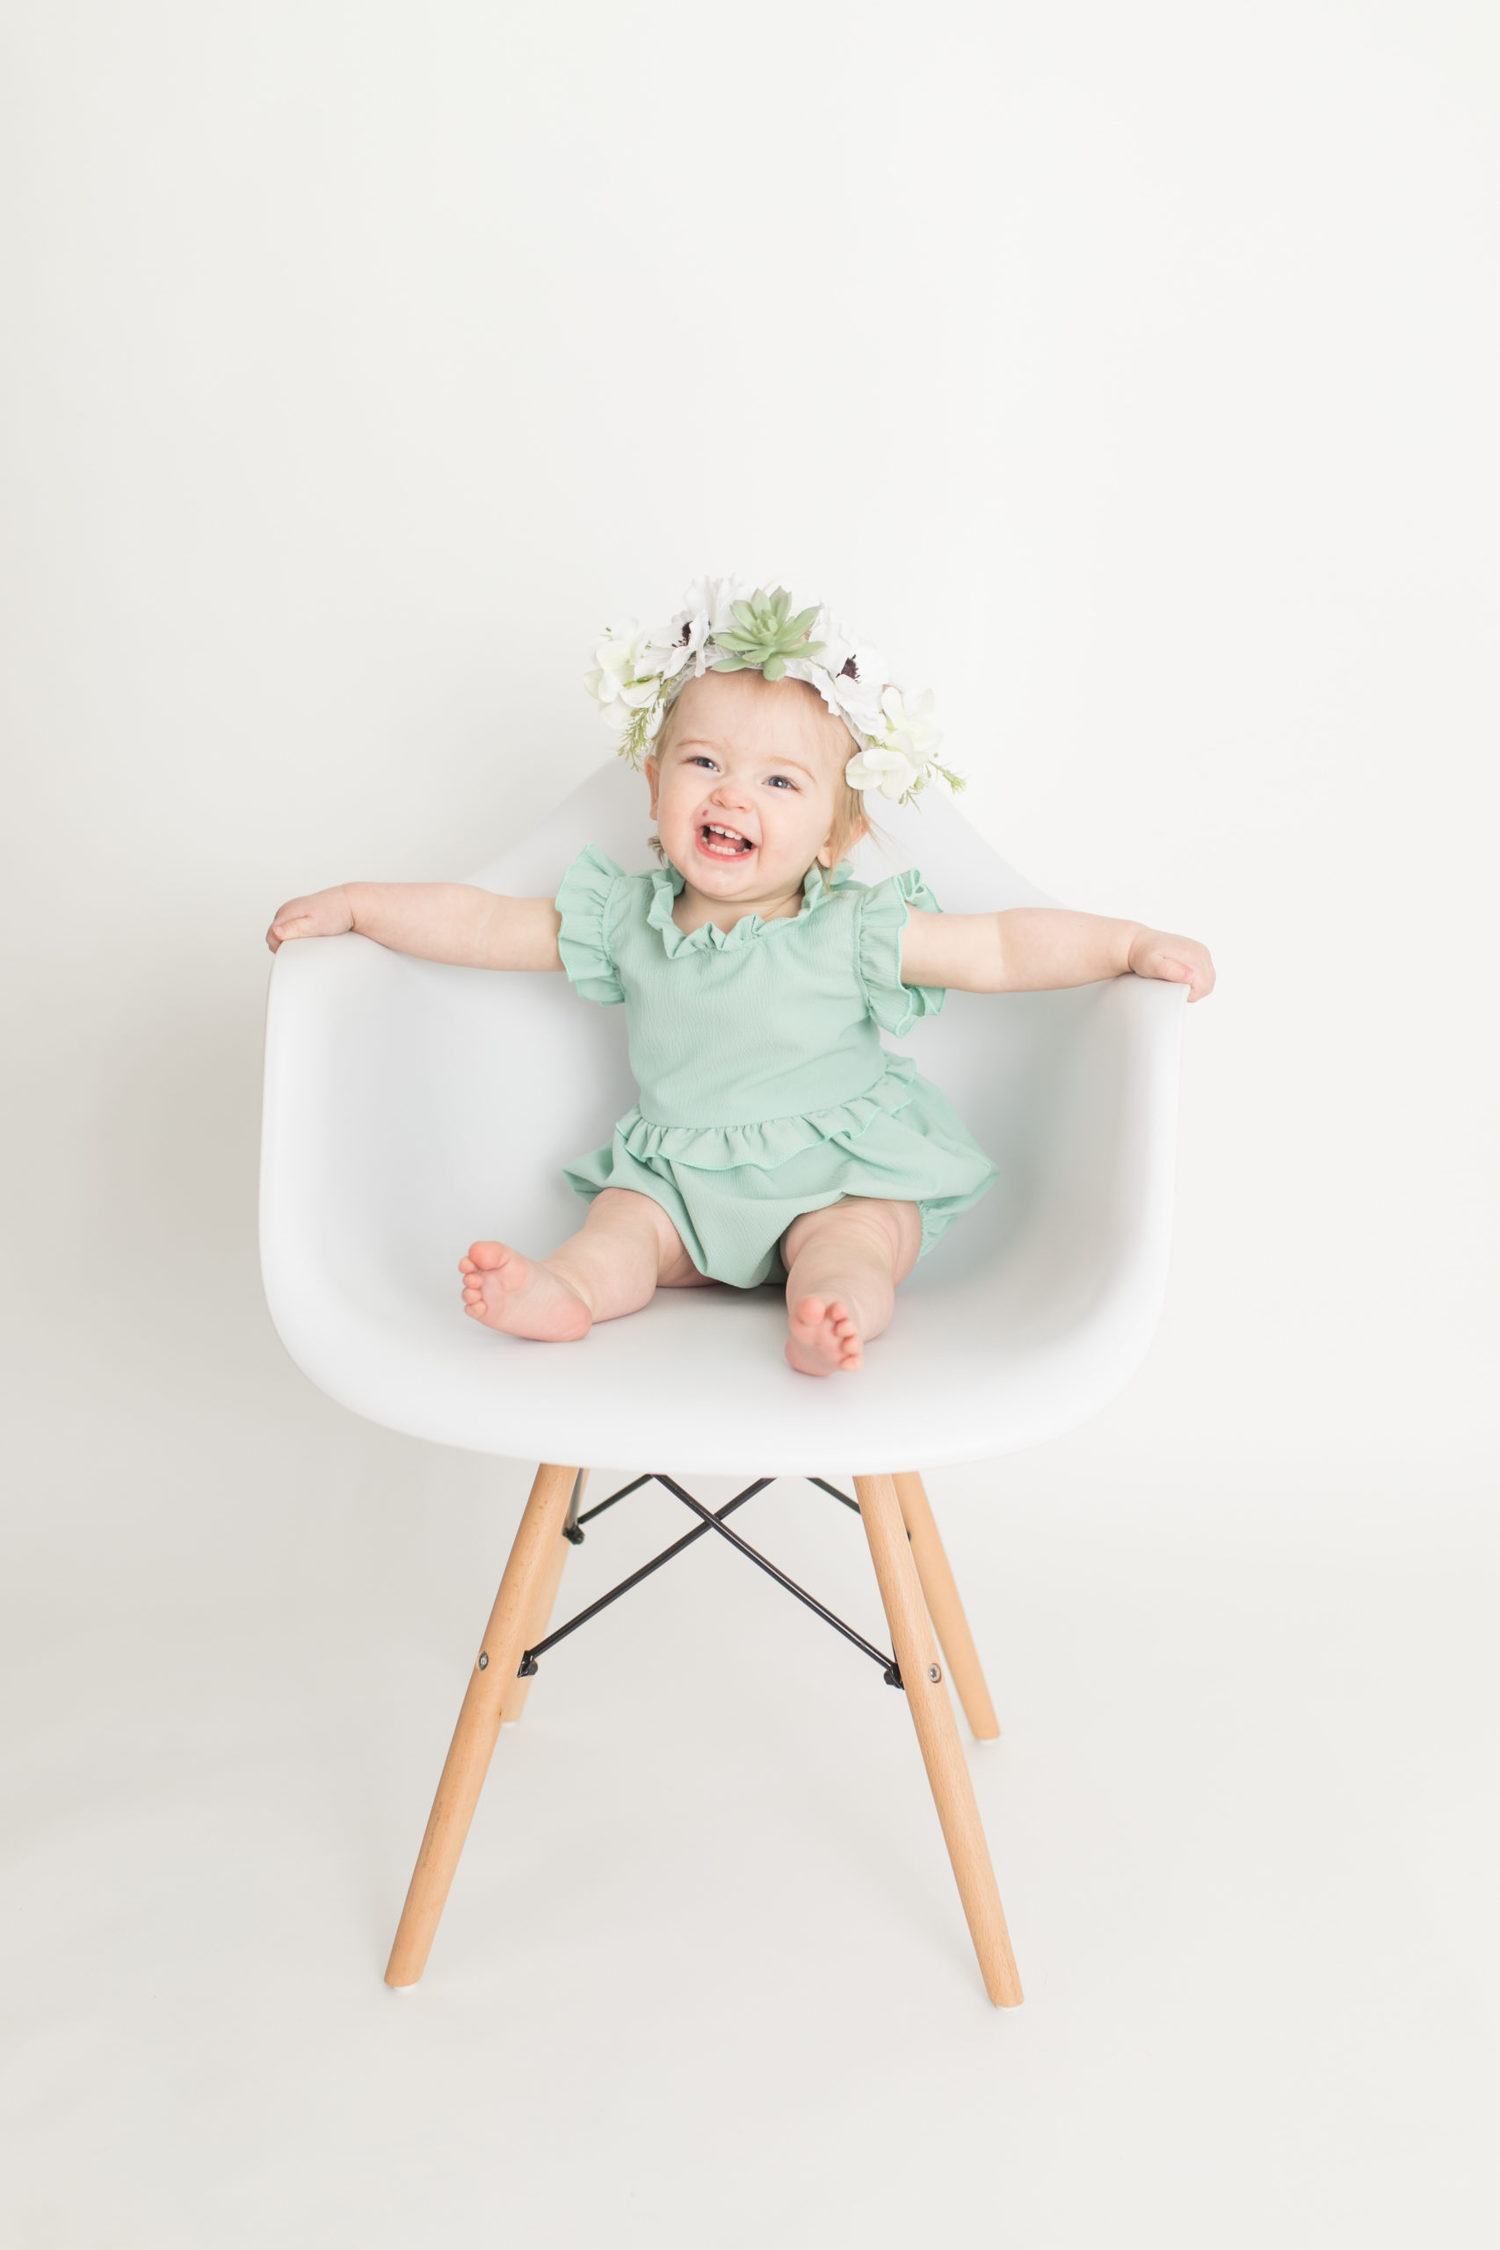 one-year-baby-cake-smash-bath-birthday-13-succulent-simple-white-chair-coastal-maine